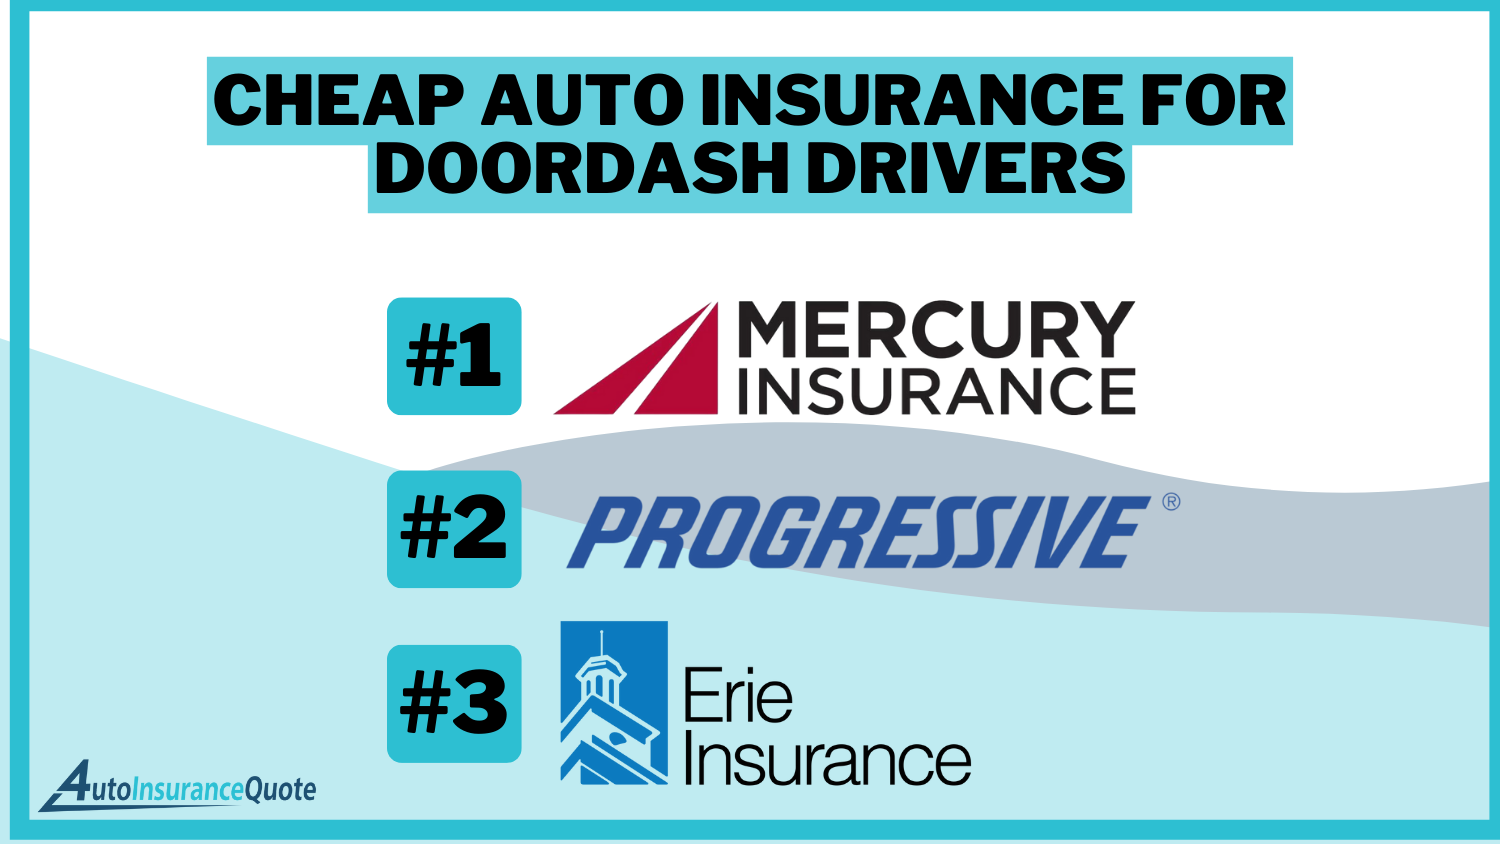 Mercury, Progressive, and Erie: Cheap Auto Insurance for DoorDash Drivers